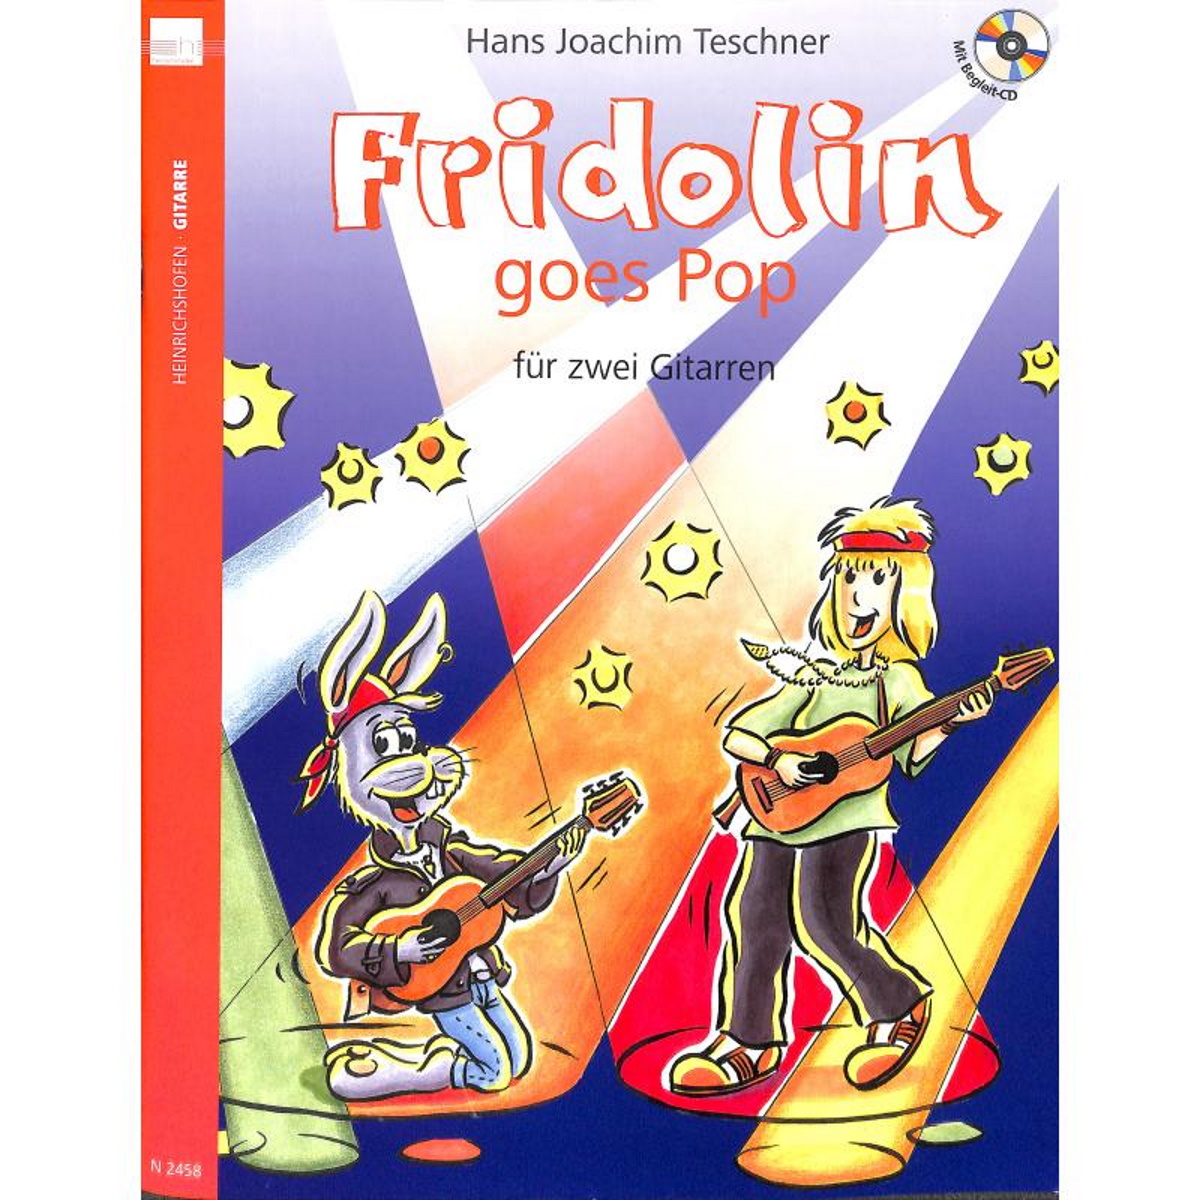 Fridolin goes Pop mit CD